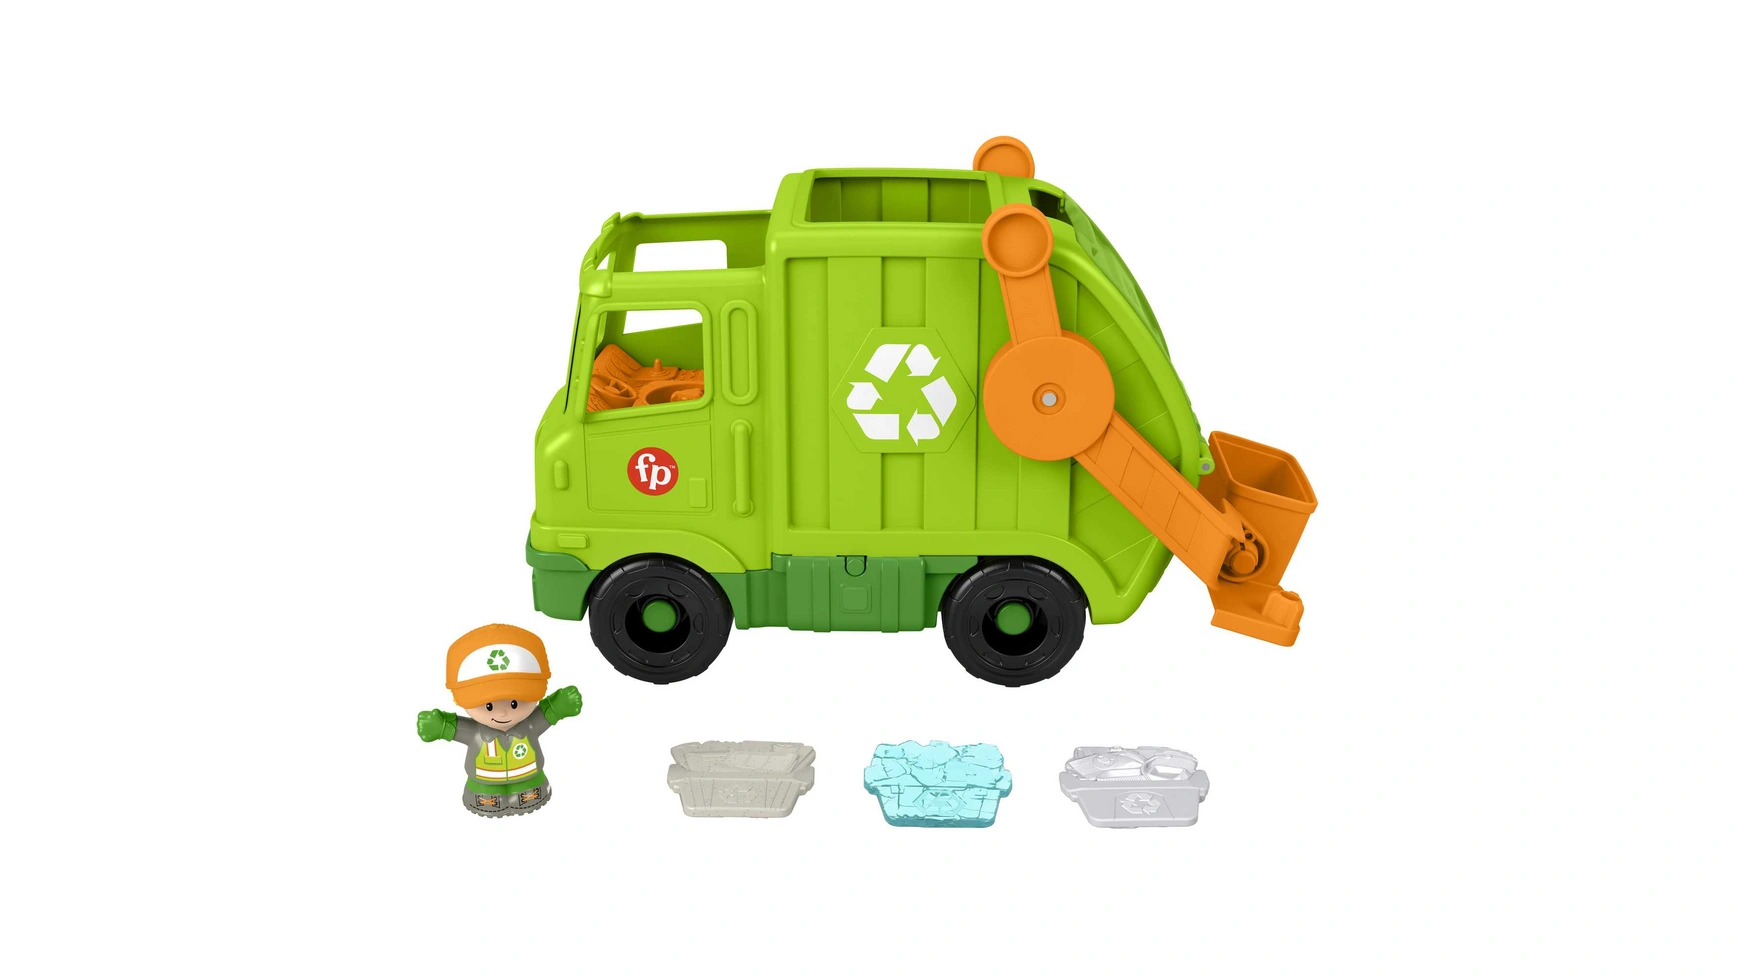 Игрушечная машина для мусора Fisher Price Little People с фигурками, обучающая игрушка фото